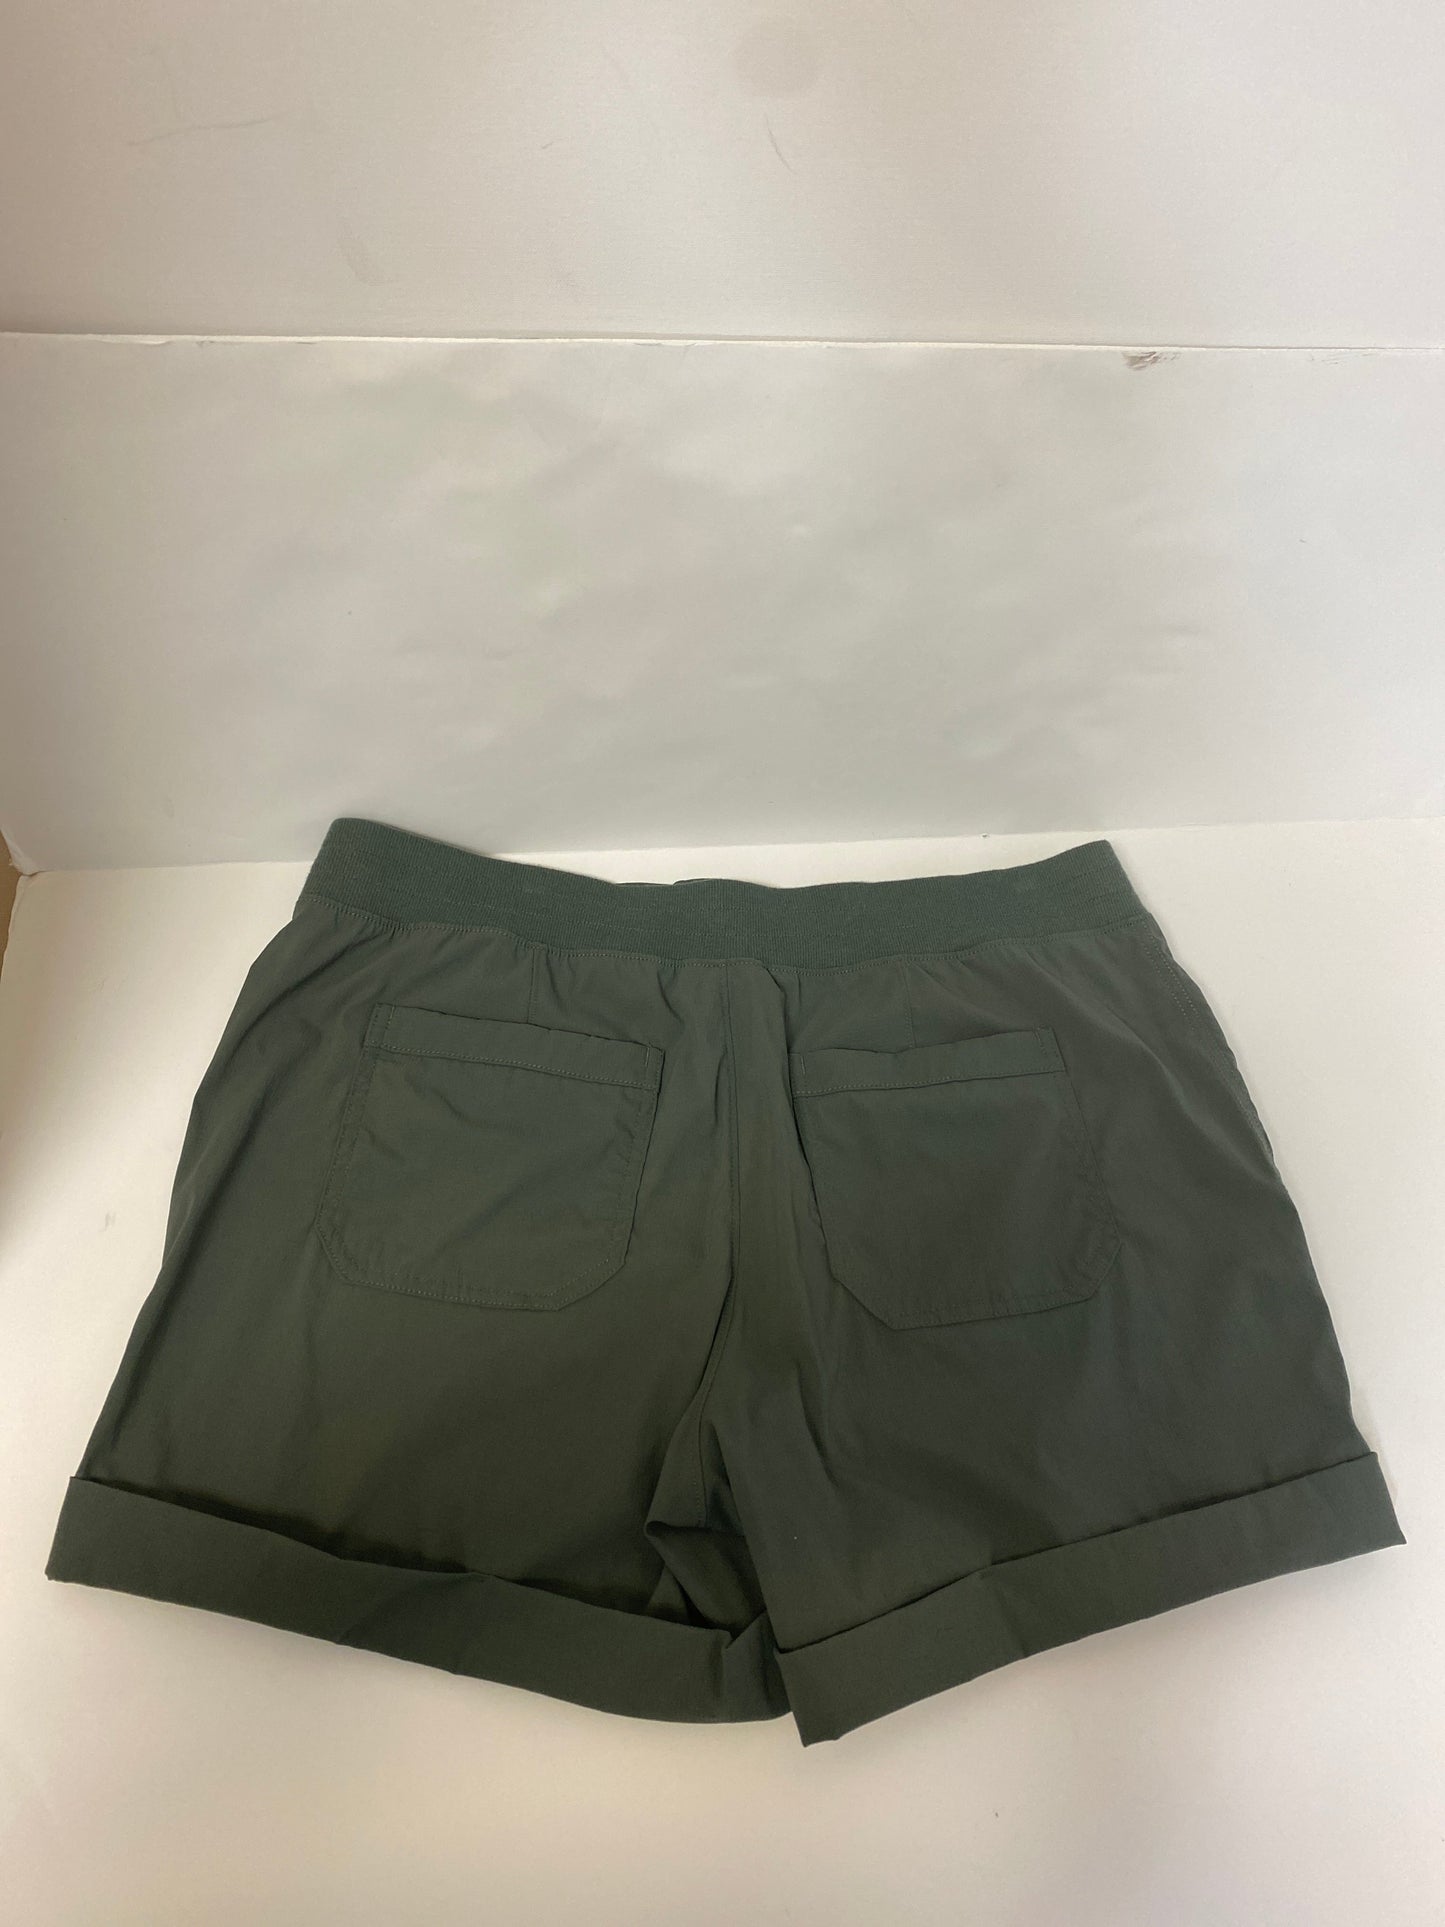 Green Shorts Tangerine, Size Xxl